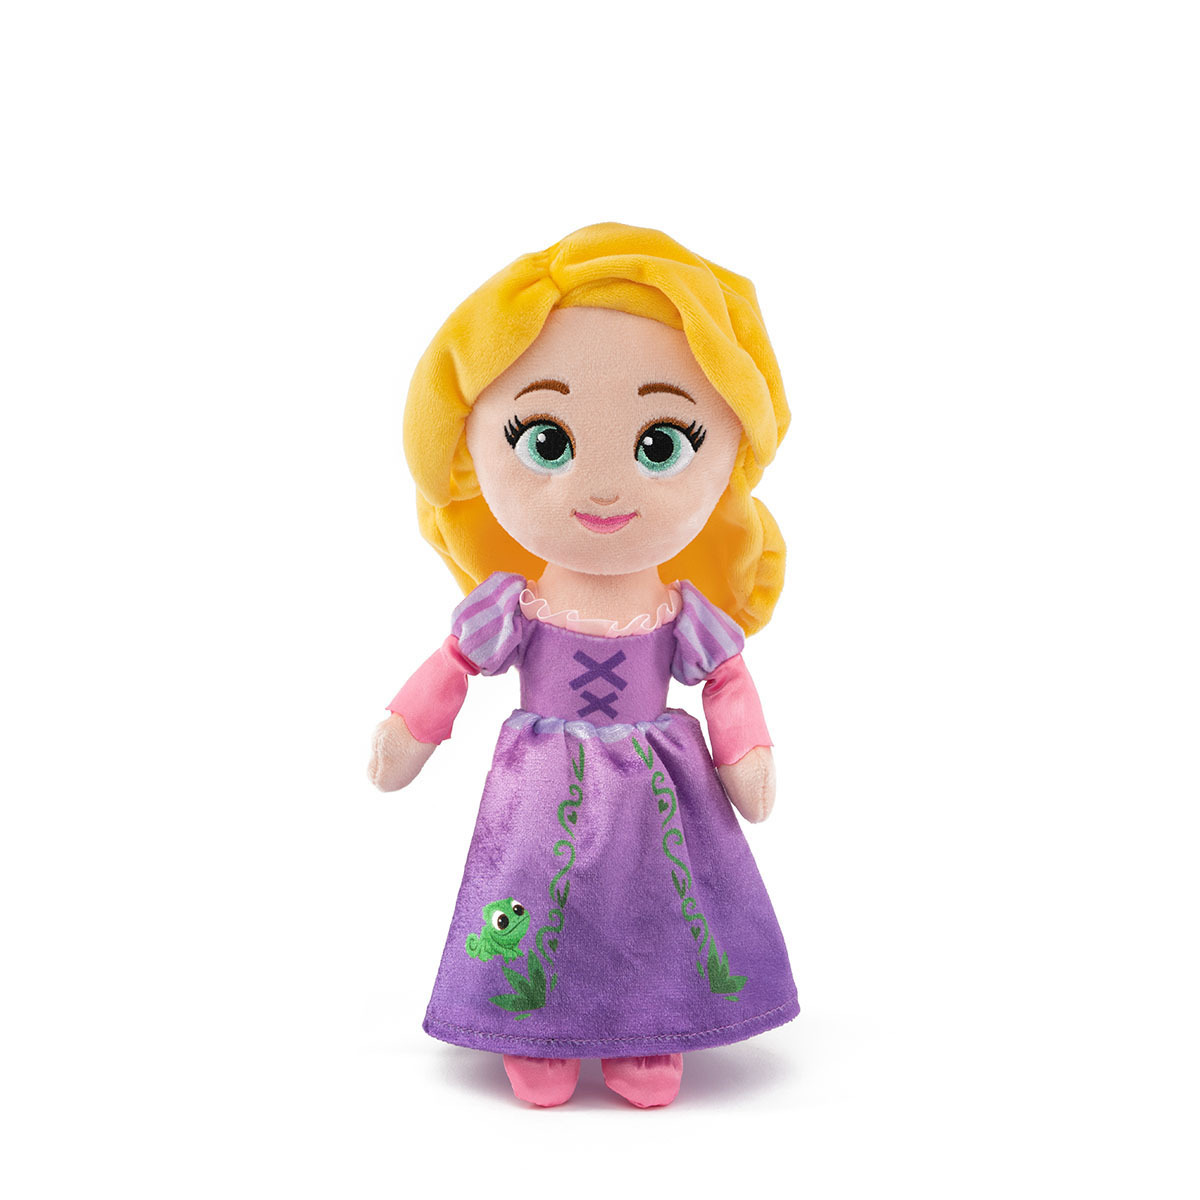 DLR - Disney Princess Cutie Plush Toy - Rapunzel — USShoppingSOS